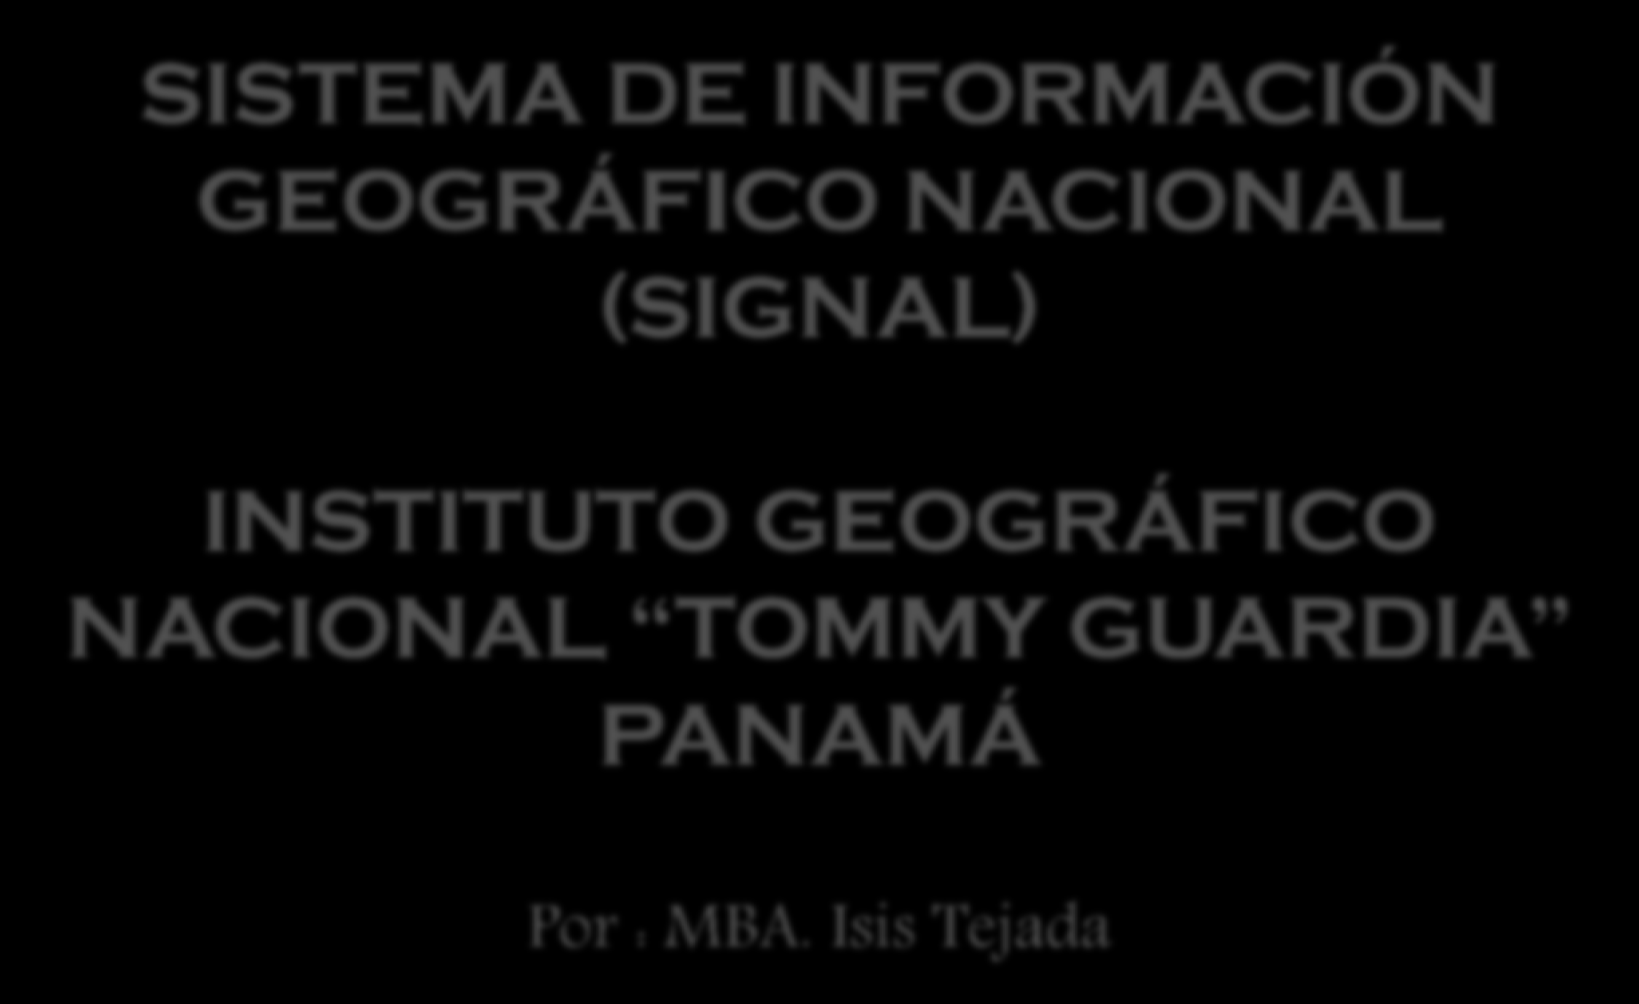 GIS & T: INFRAESTRUCTURA, EXPERIENCE OF PANAMA SISTEMA DE INFORMACIÓN GEOGRÁFICO